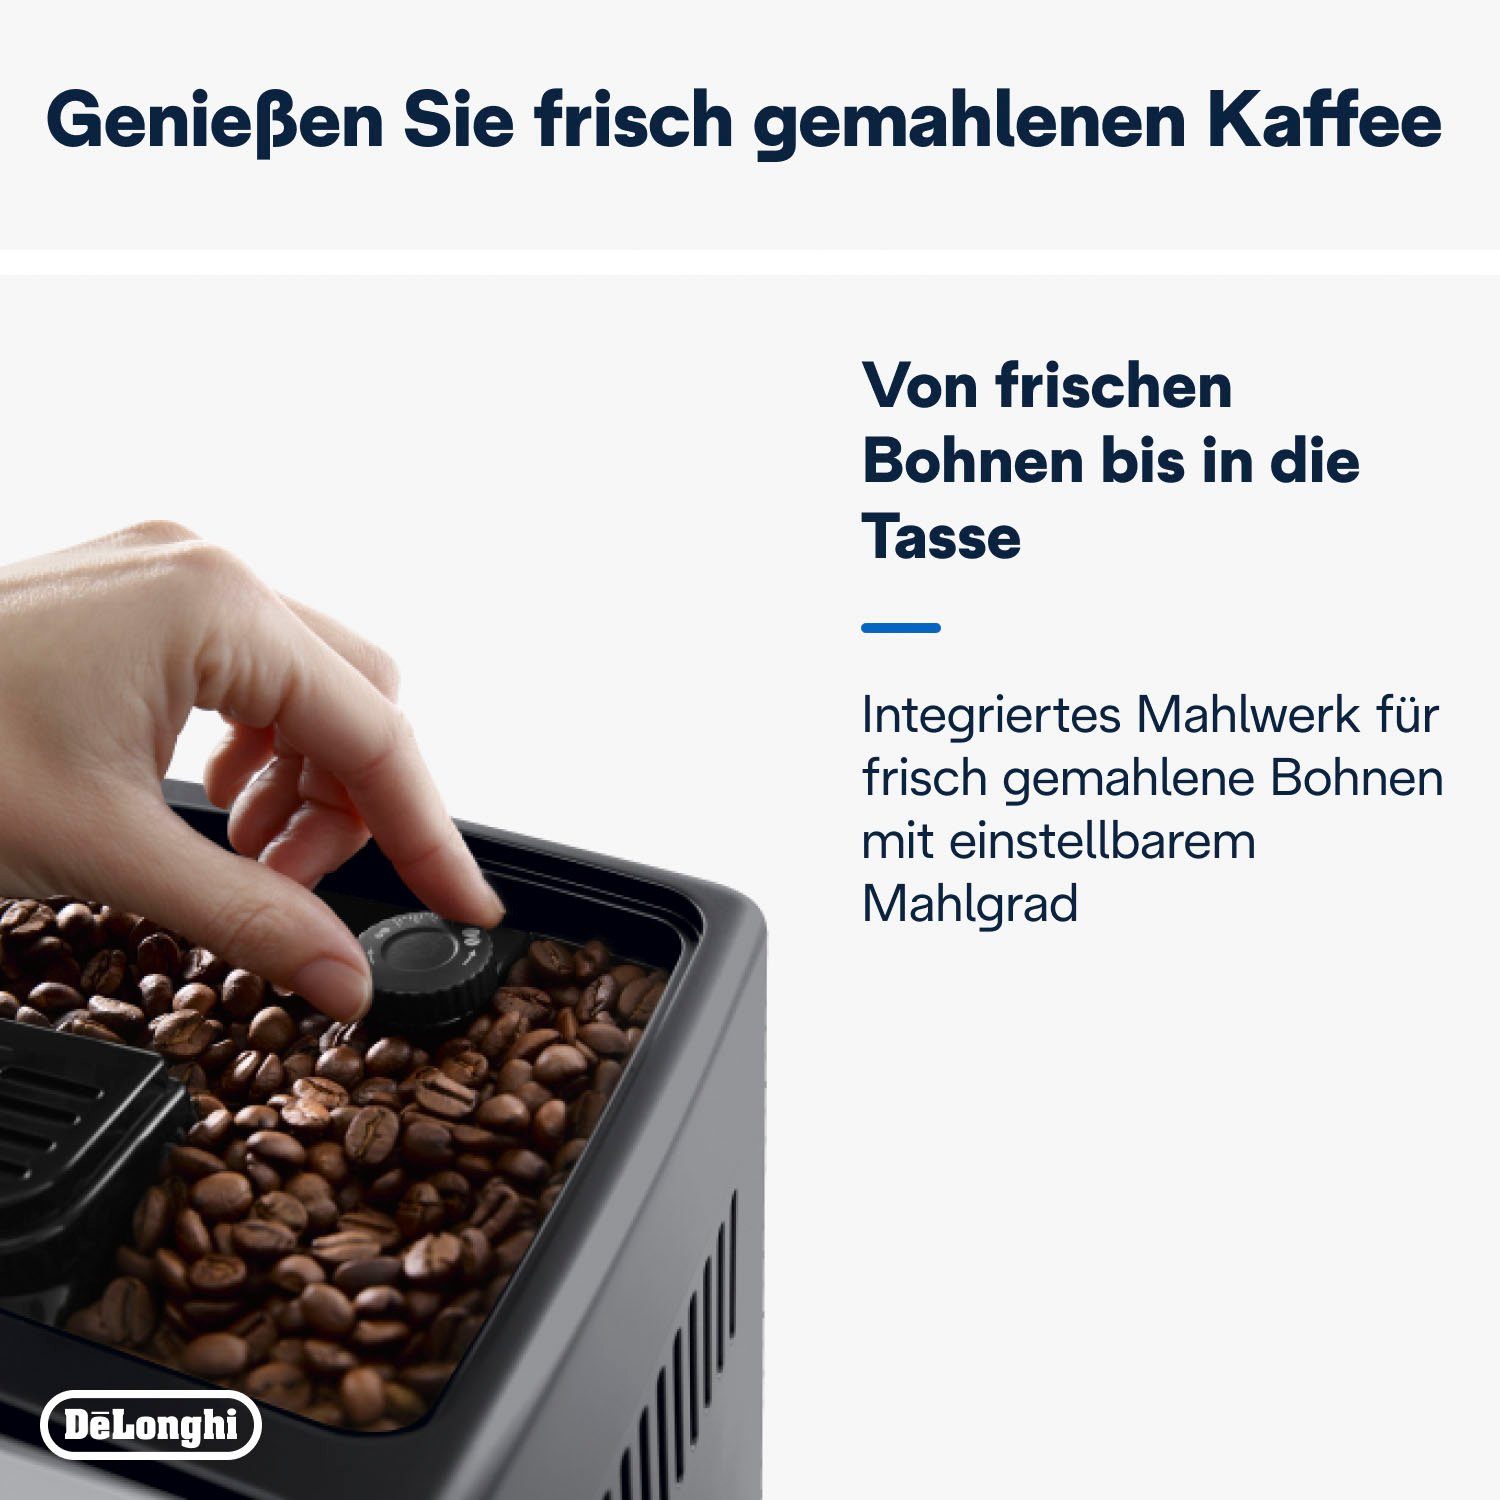 Kaffeevollautomat ECAM Dinamica De'Longhi und mit Kaffeekannenfunktion LatteCrema Plus Milchsystem 370.70.B,